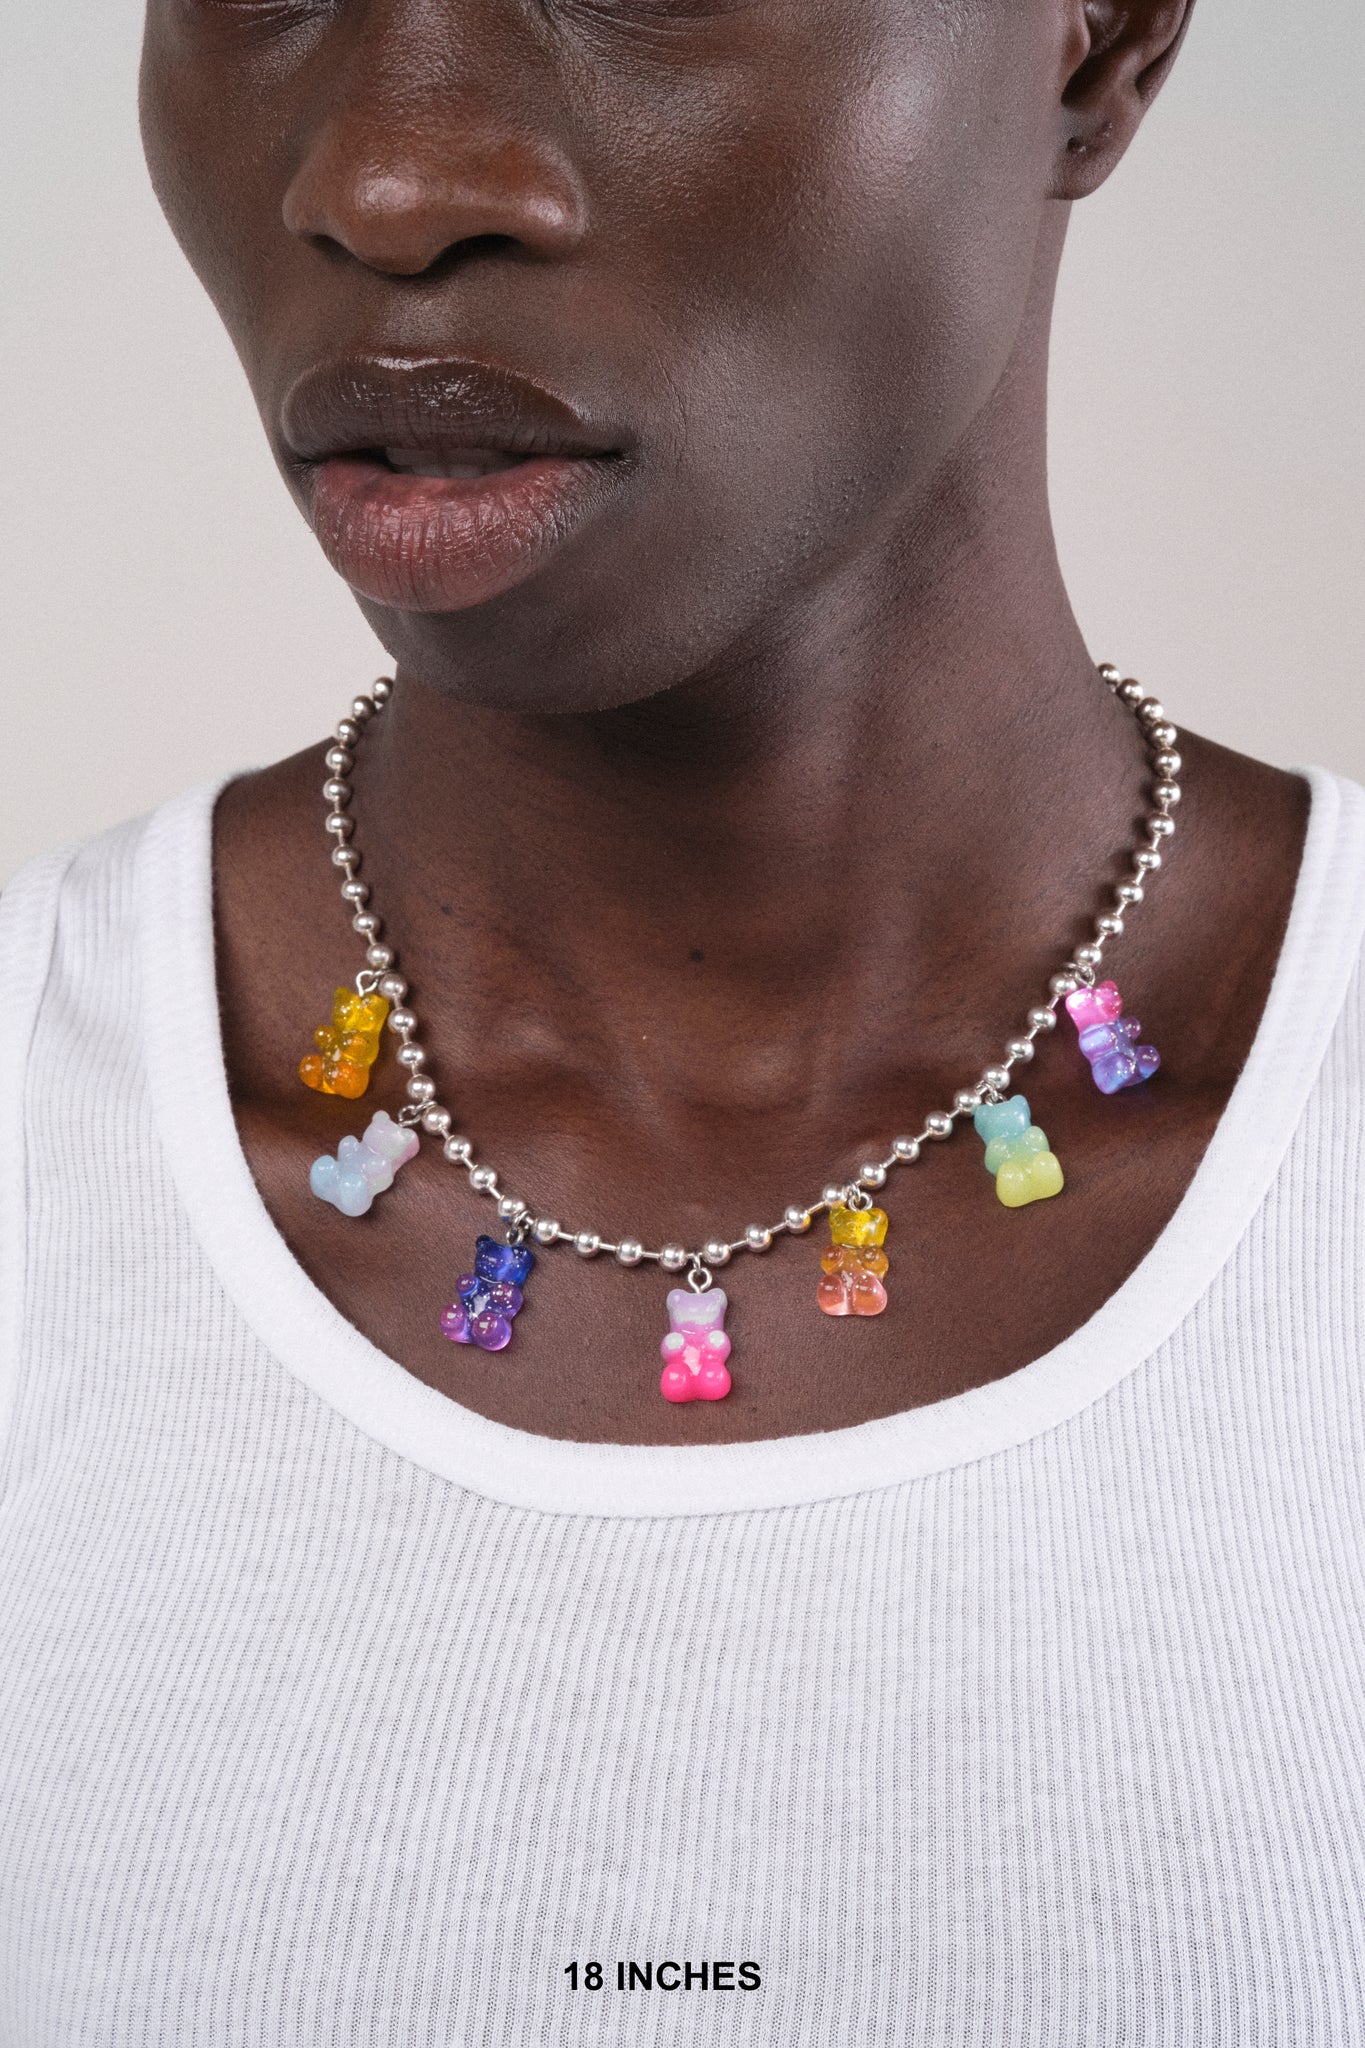 The Gummy Bear Charm Chain Necklace